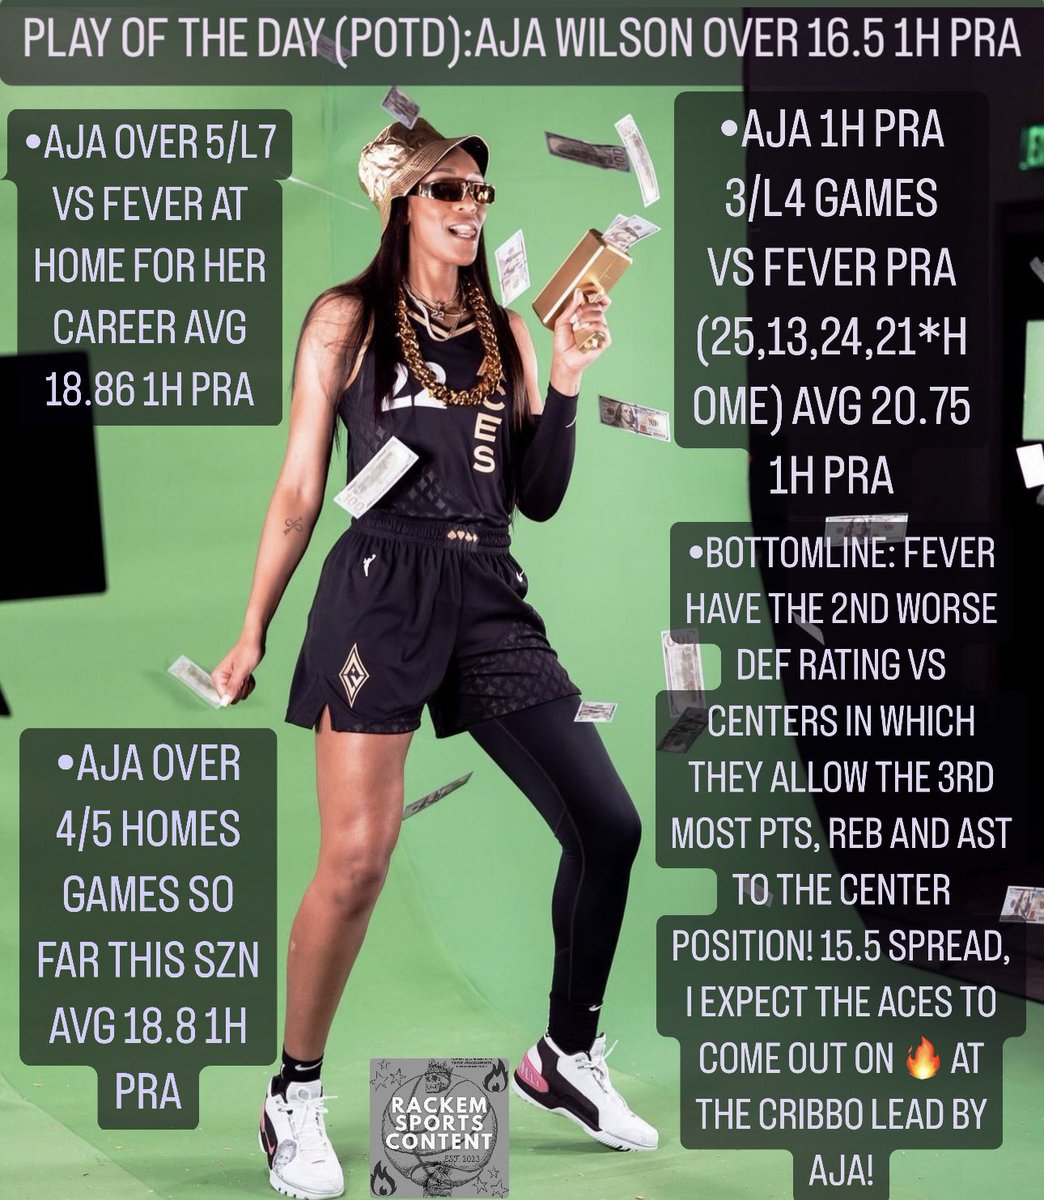 🔥🔥 PLAY OF THE DAY 🔥🔥(POTD):

AJA WILSON OVER 16.5 1H PRA

 #POTD #PLAYOFTHEDAY #PrizePicks #playerprops #freeplays #freepicks #DFS #nbabets #Gambling #gamblingtwitter #sportsbetting  #sportsgambling #parlay #NBA  #PrizePicksNBA #prizepicklocks #WNBA #ajawilson